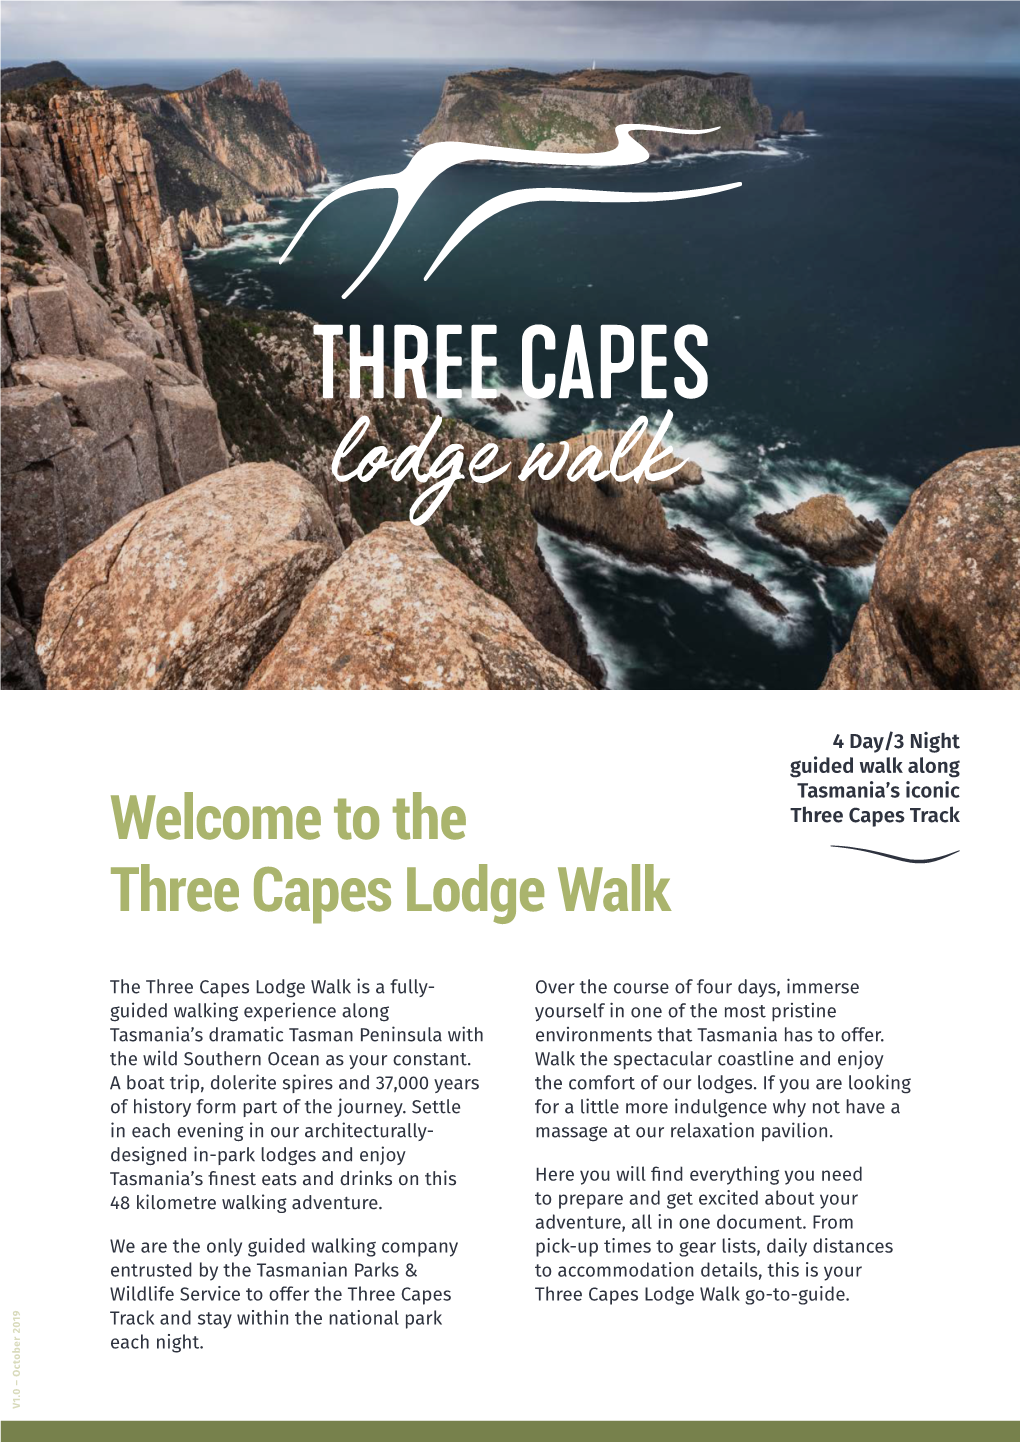 The Three Capes Lodge Walk